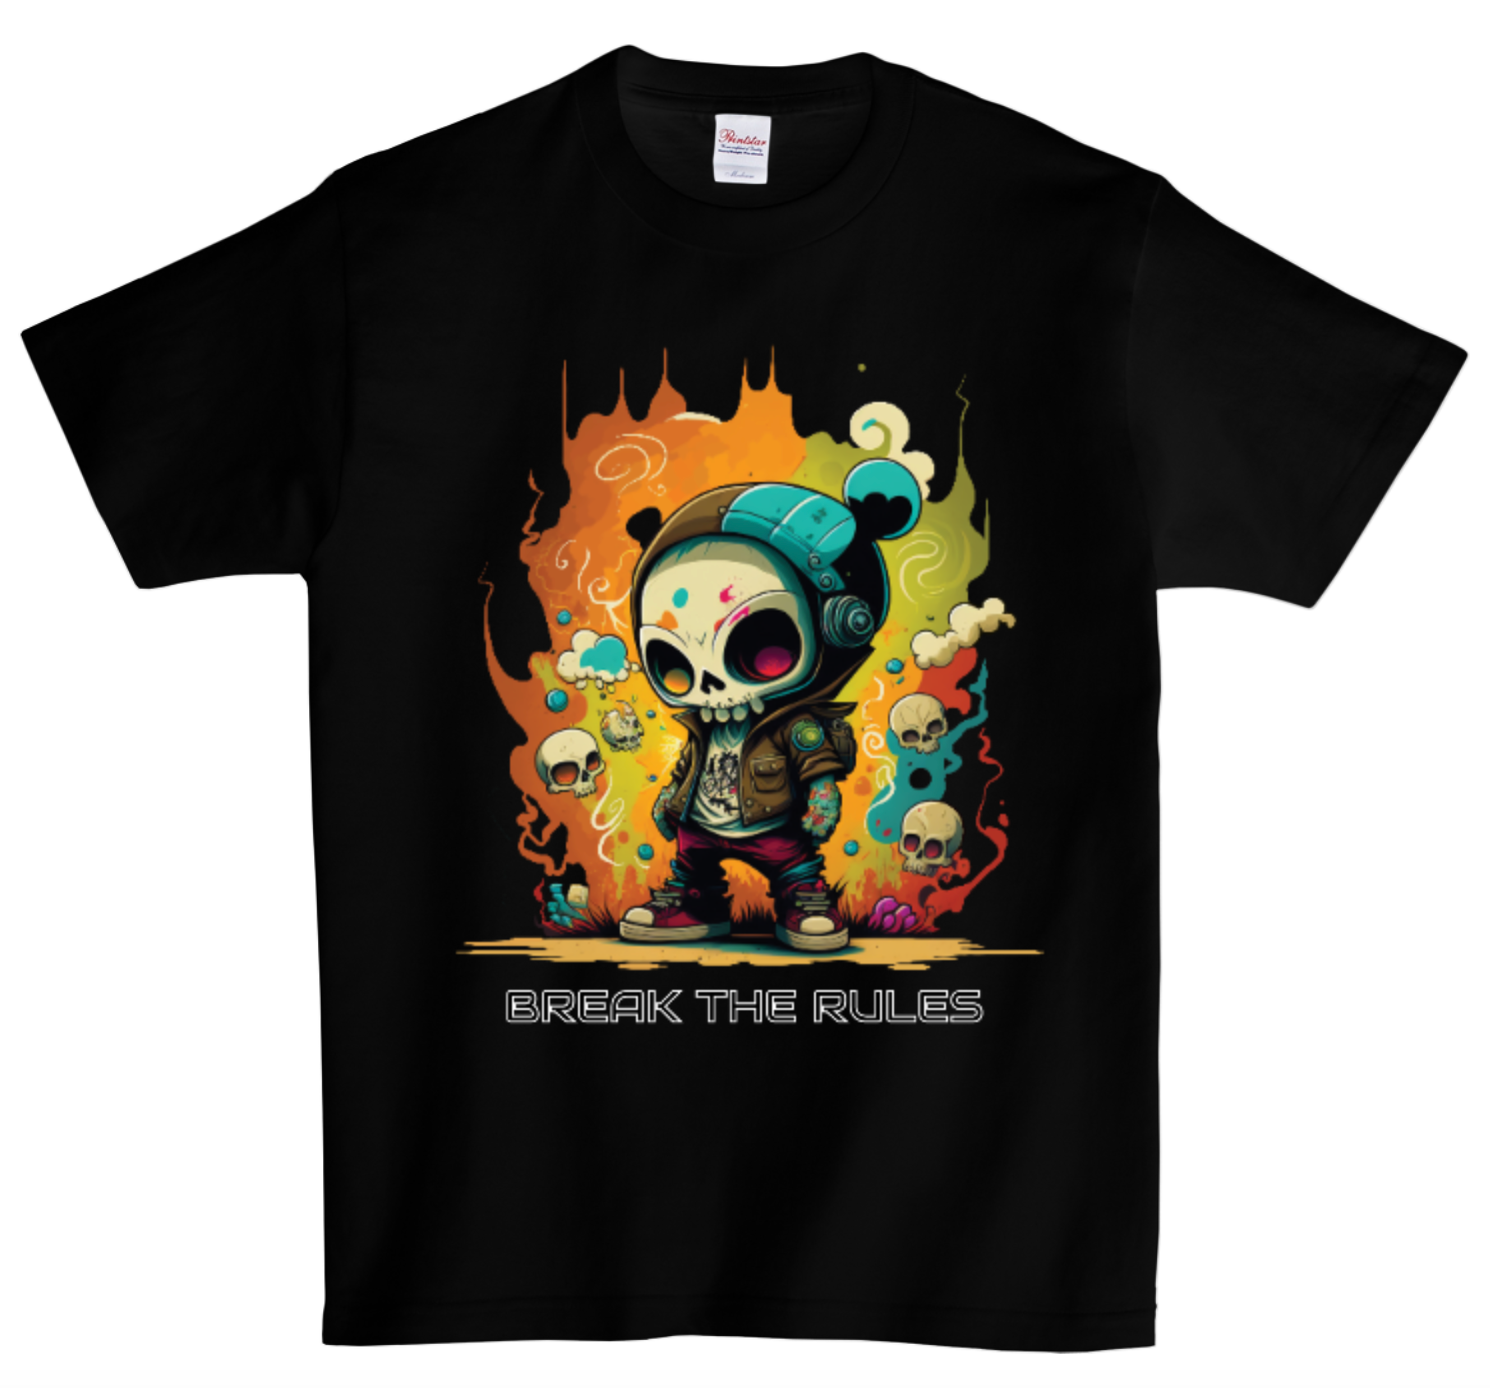 Skull T Shirts Break the Rules DTG Full color Edition